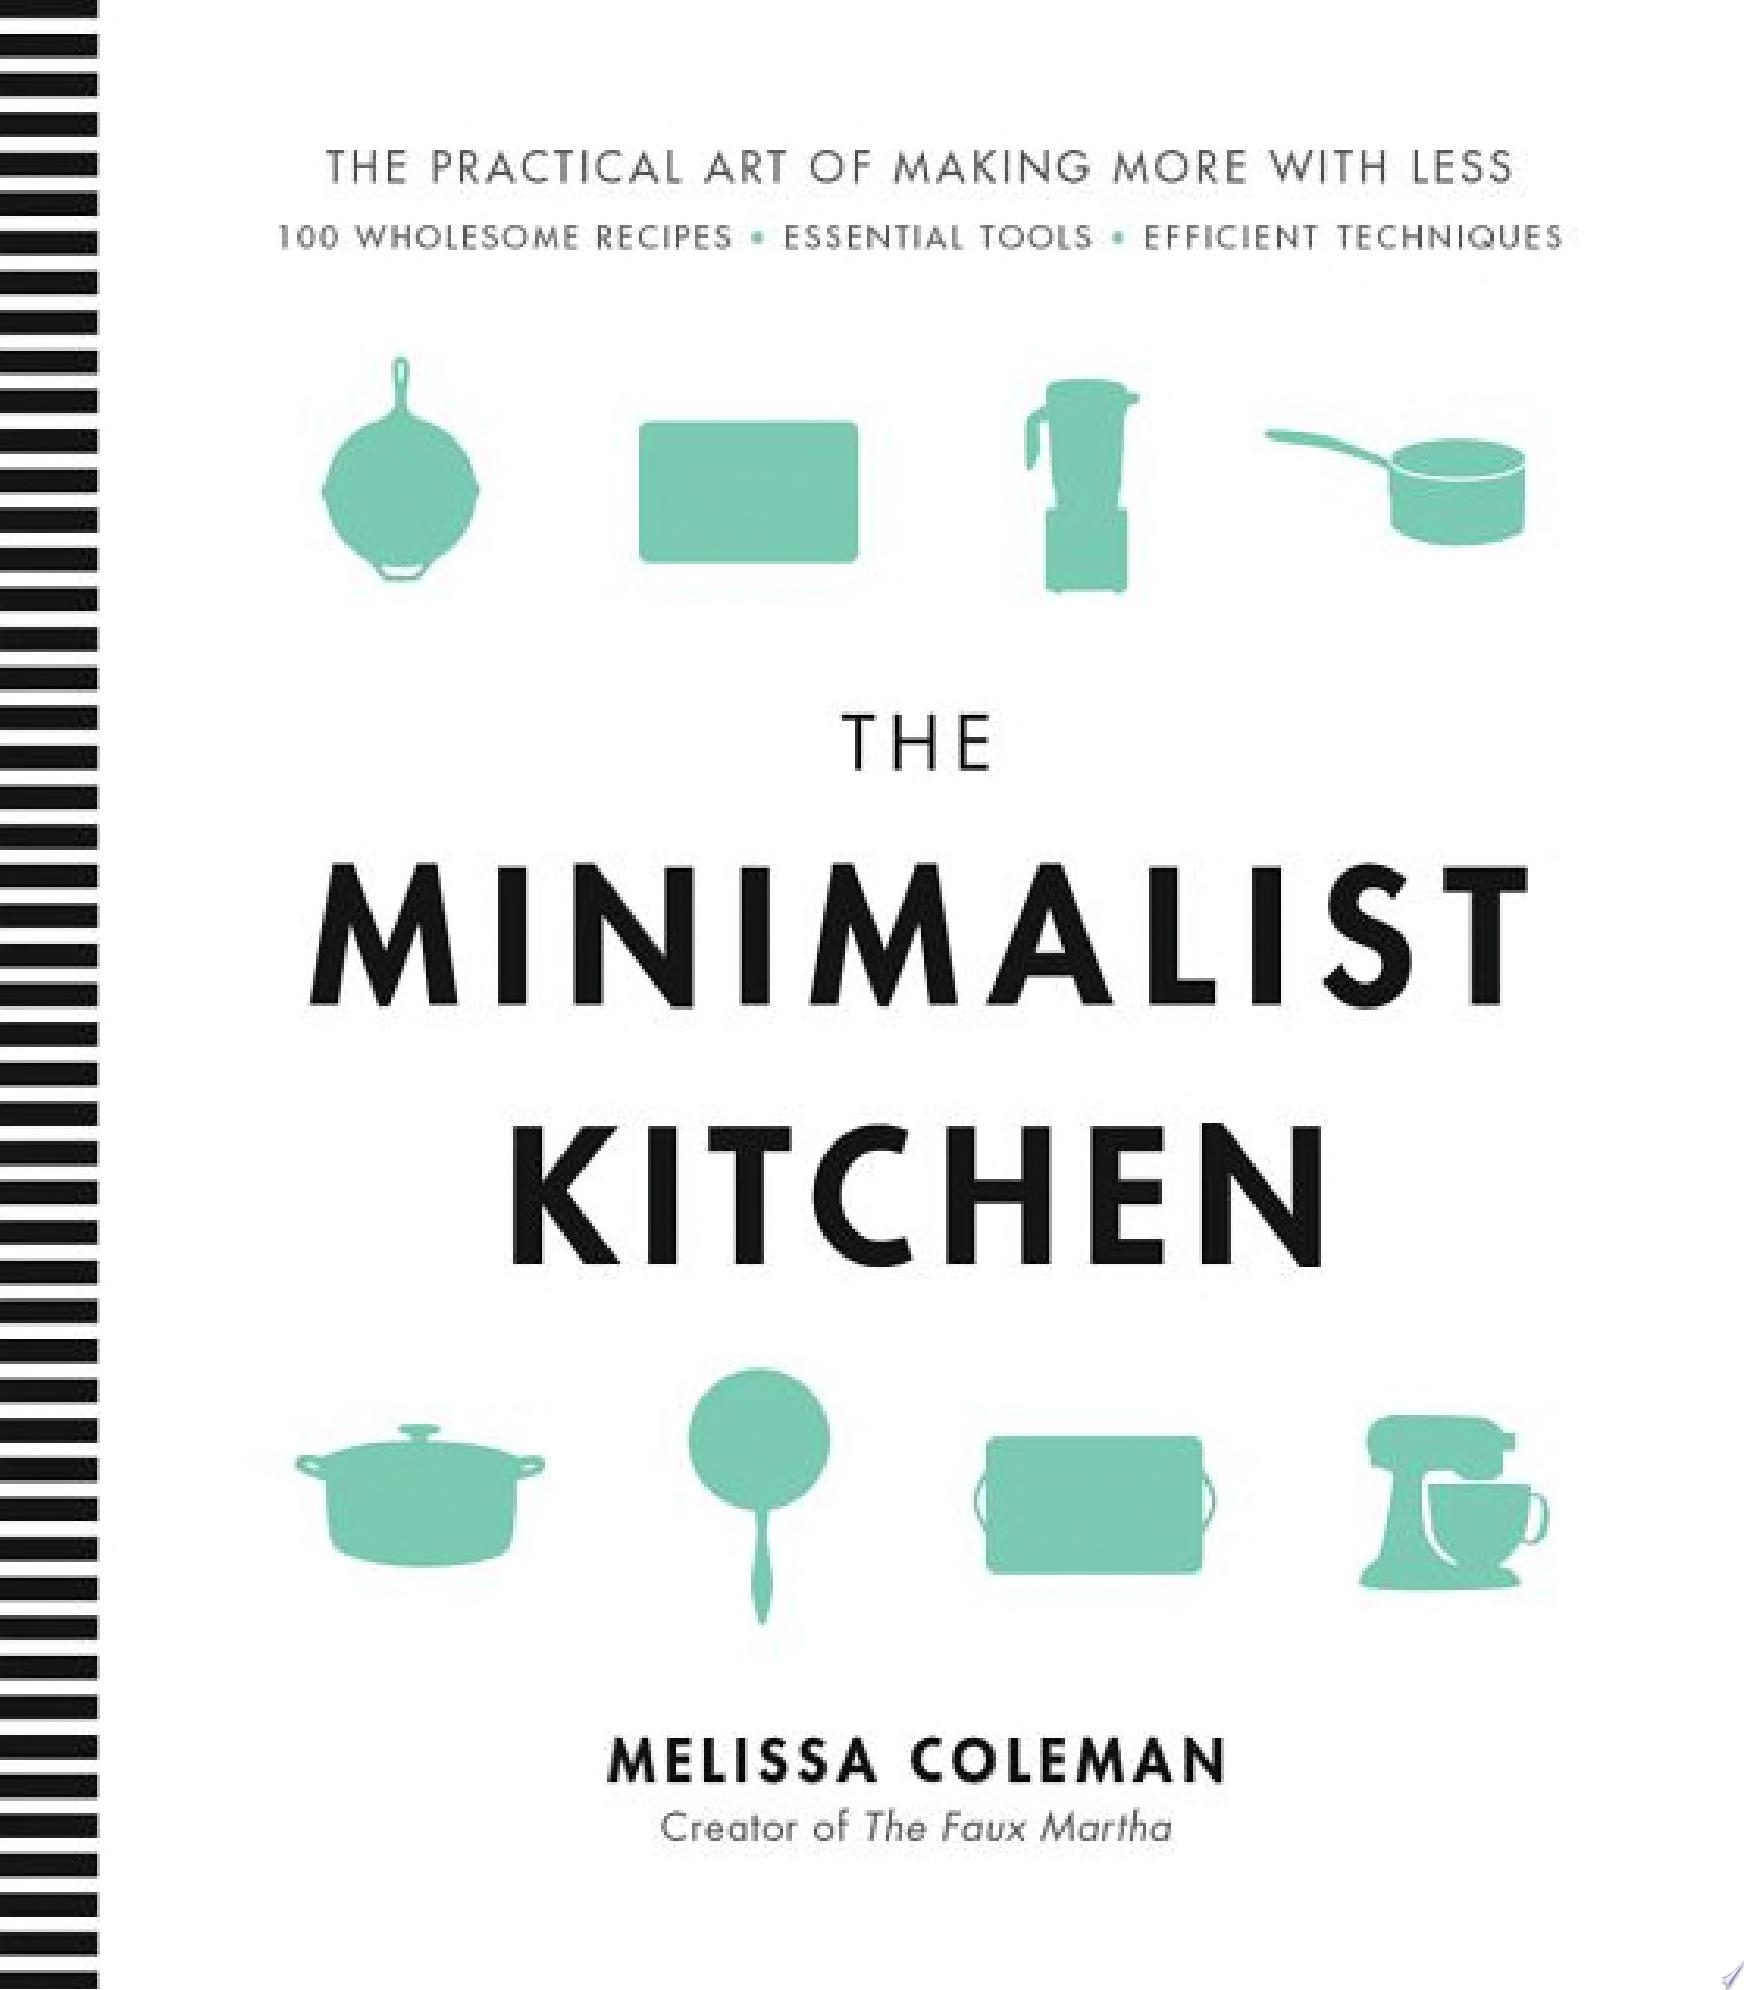 Image for "The Minimalist Kitchen"